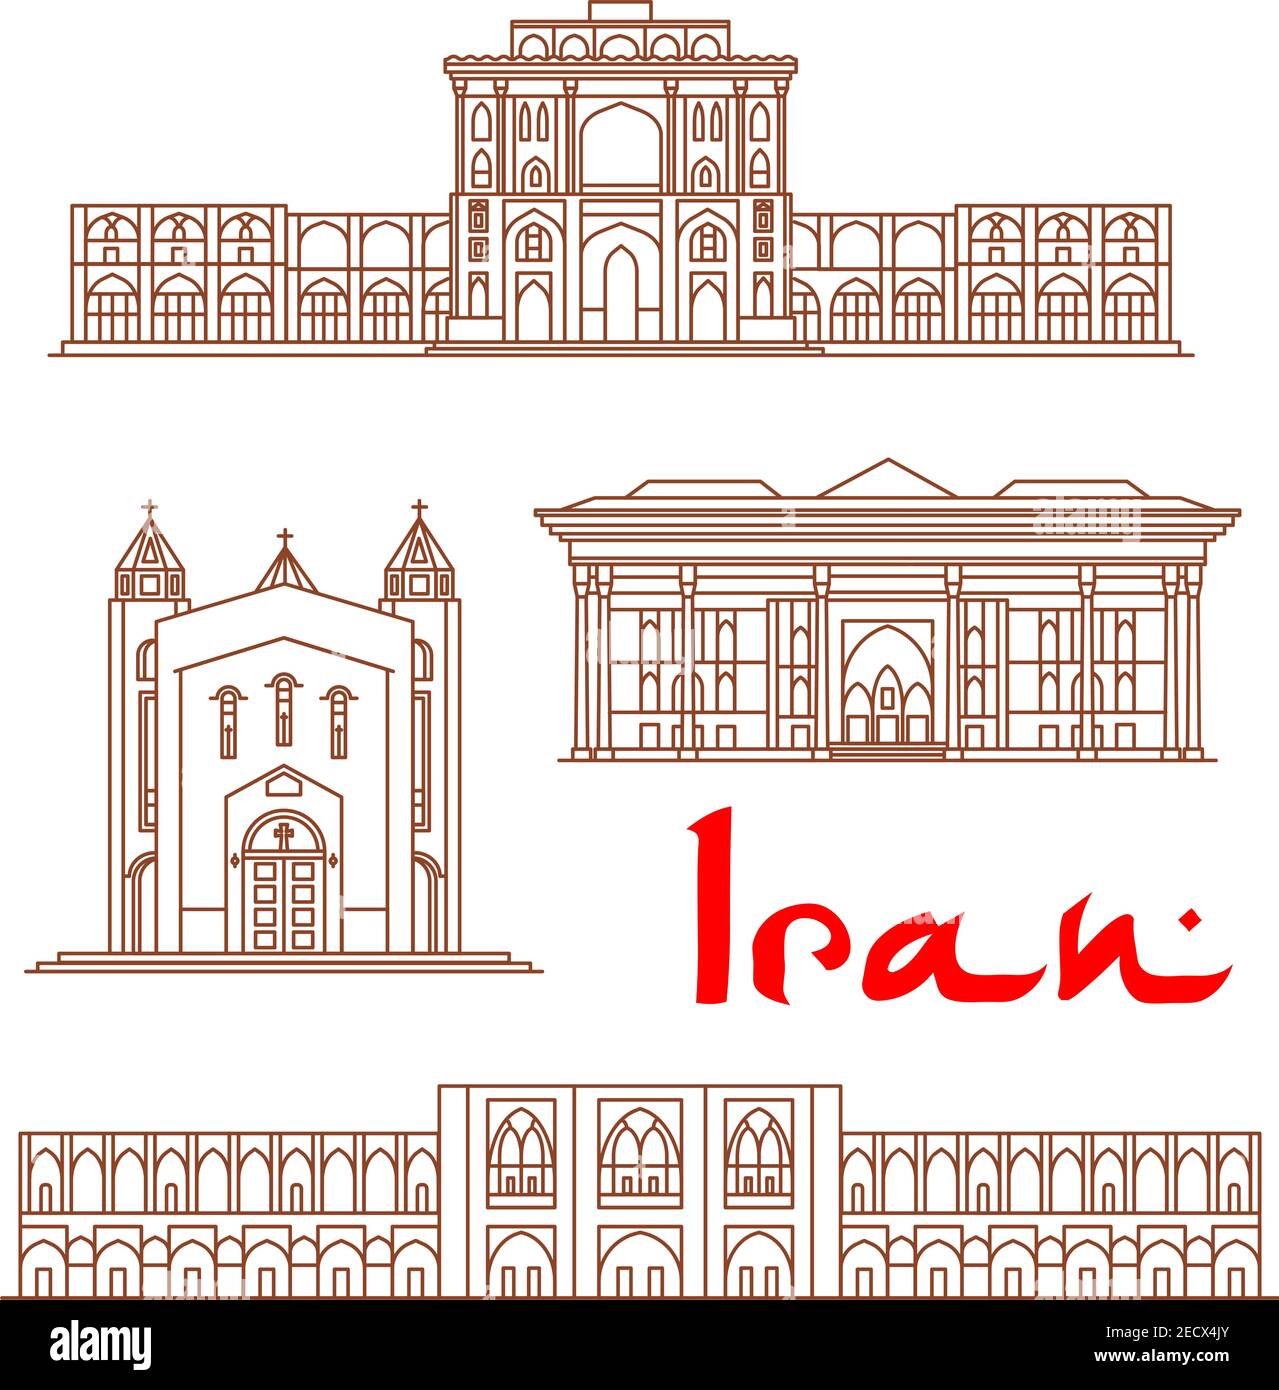 Iran vector thin line icons of Ali Qapu Palace, Saint Sarkis Cathedral, Chehel Sotoun, Si-o-seh pol bridge. Historic architecture buildings, landmarks Stock Vector